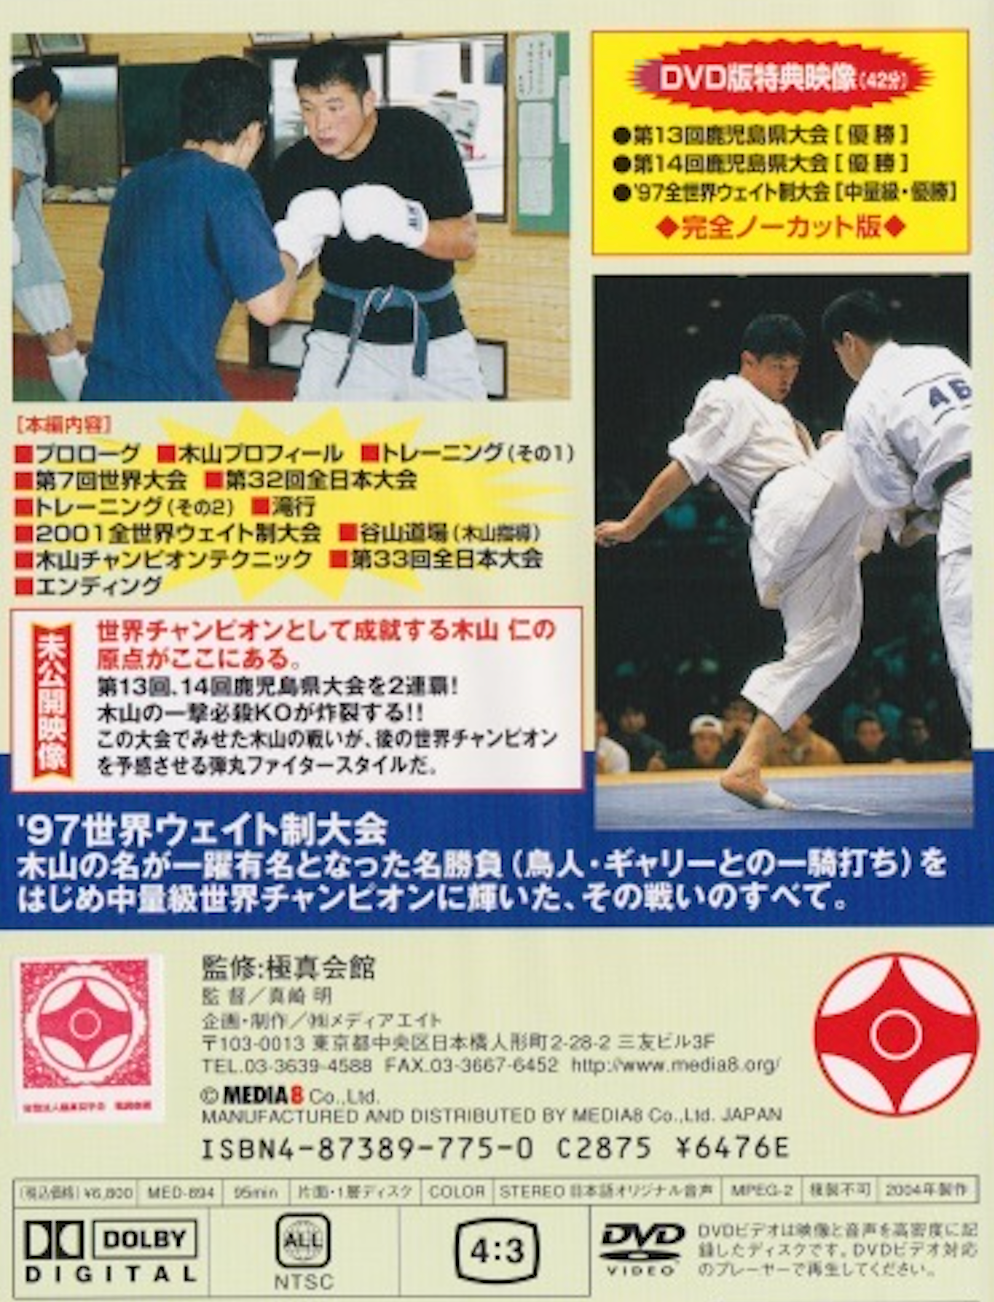 DVD de Hitoshi Kiyama Kyokushin Bullet Fighter.